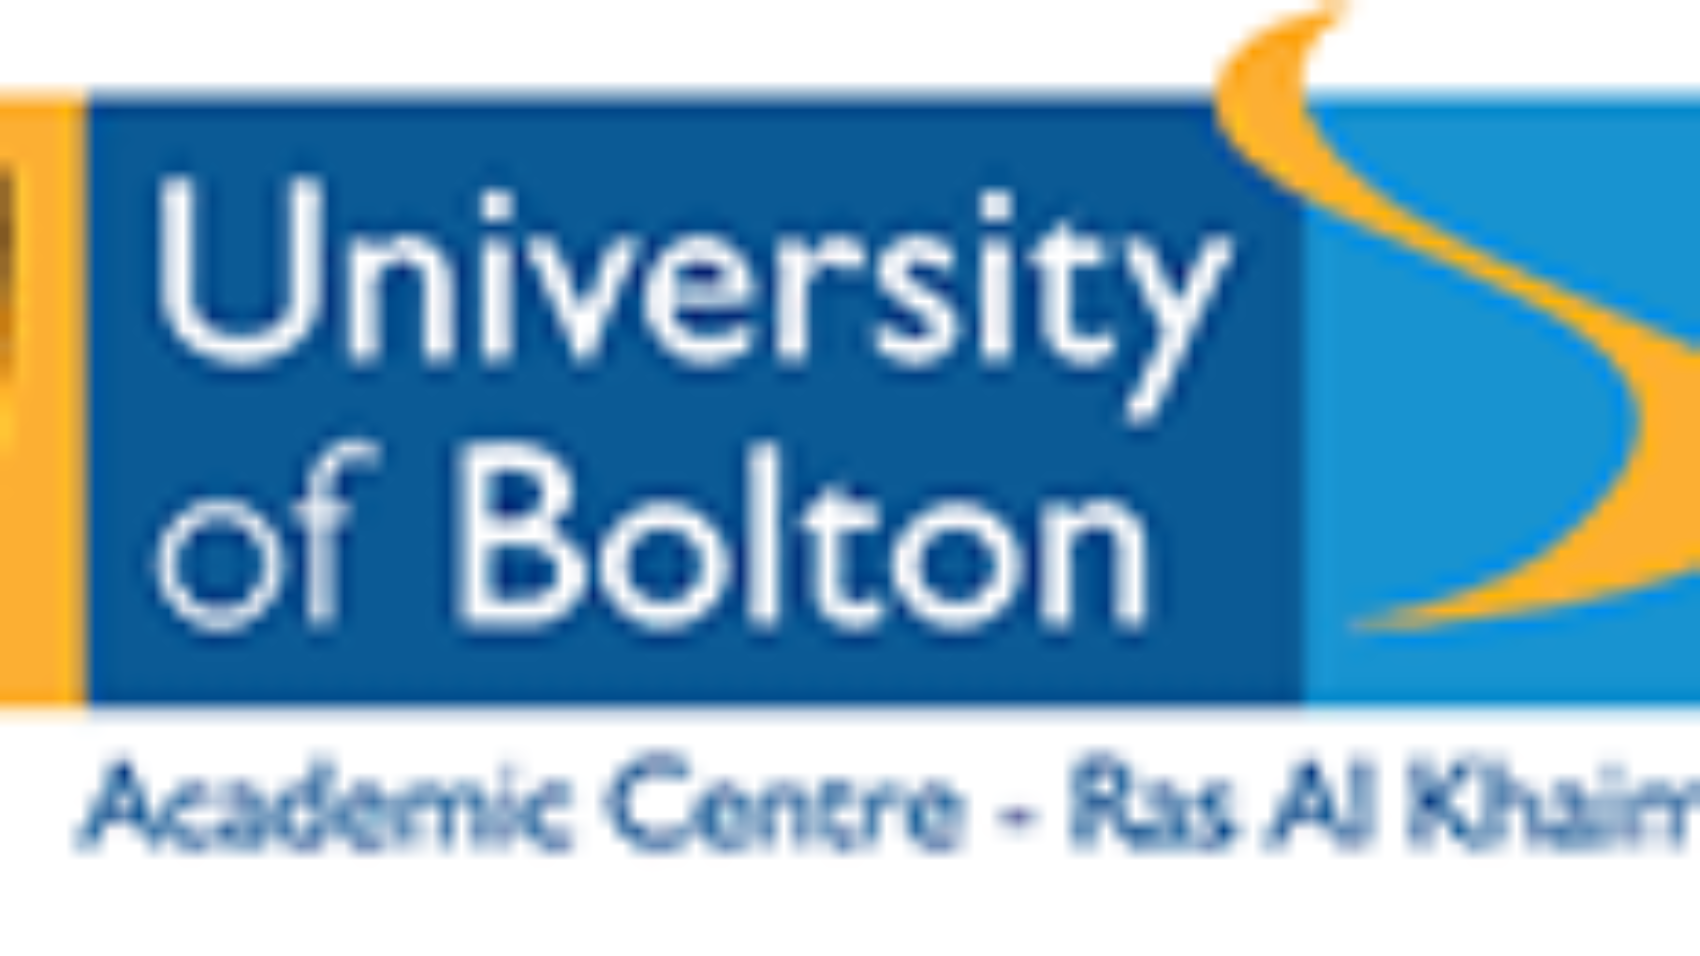 University-of-Bolton